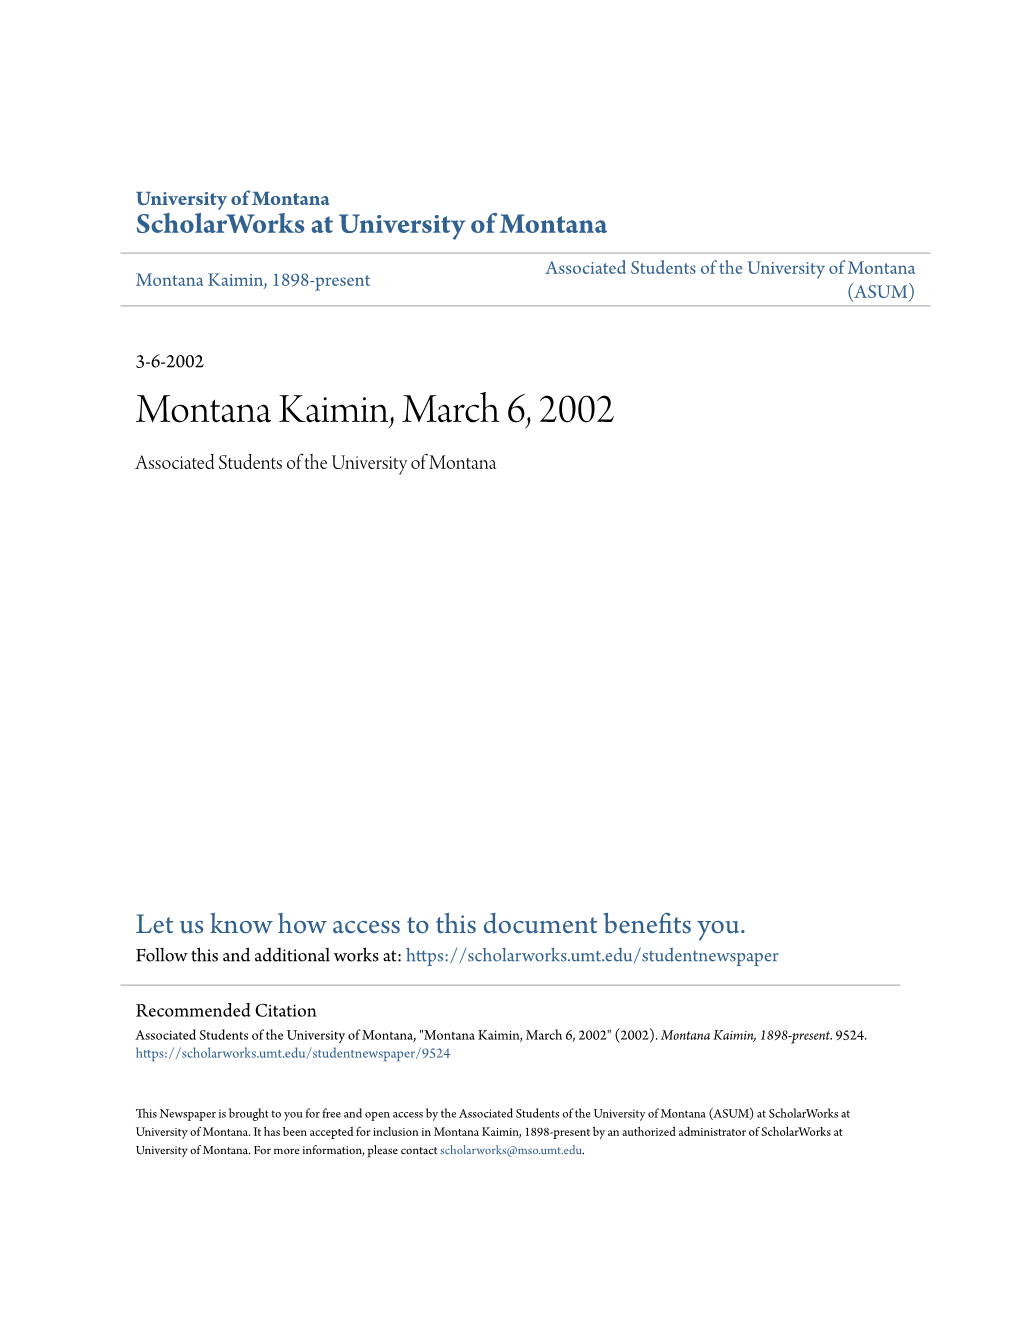 Montana Kaimin, March 6, 2002 Associated Students of the University of Montana